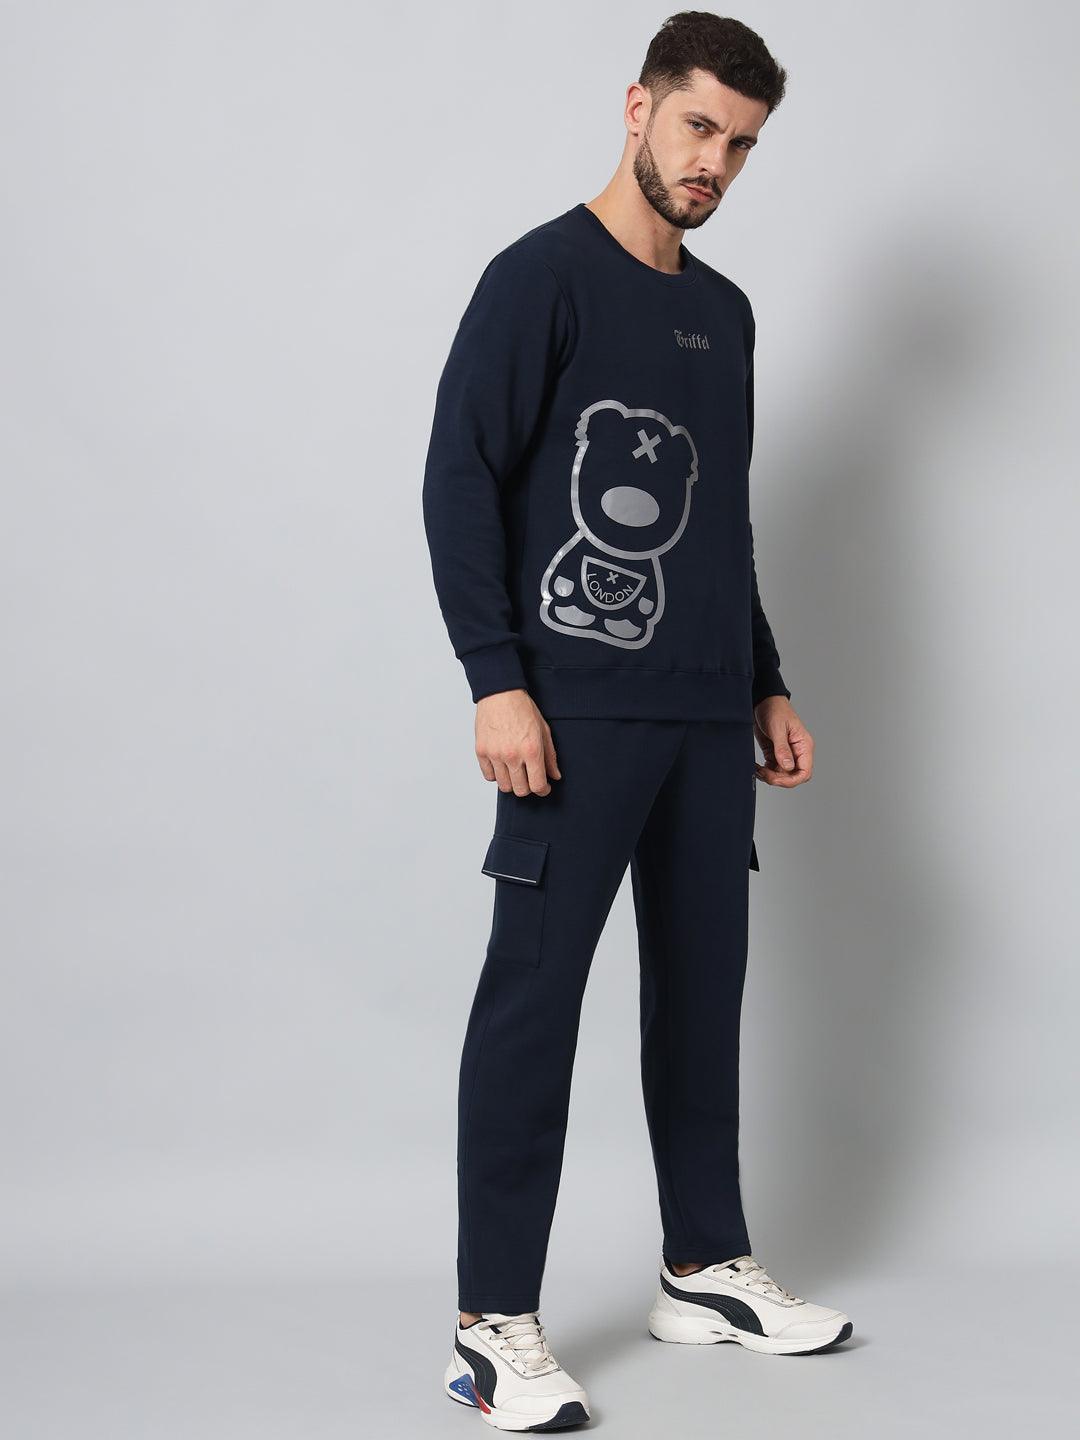 Griffel Men's Front Teddy Print Fleece Basic R-Neck Sweatshirt and Joggers Full set Grey Navy Tracksuit - griffel